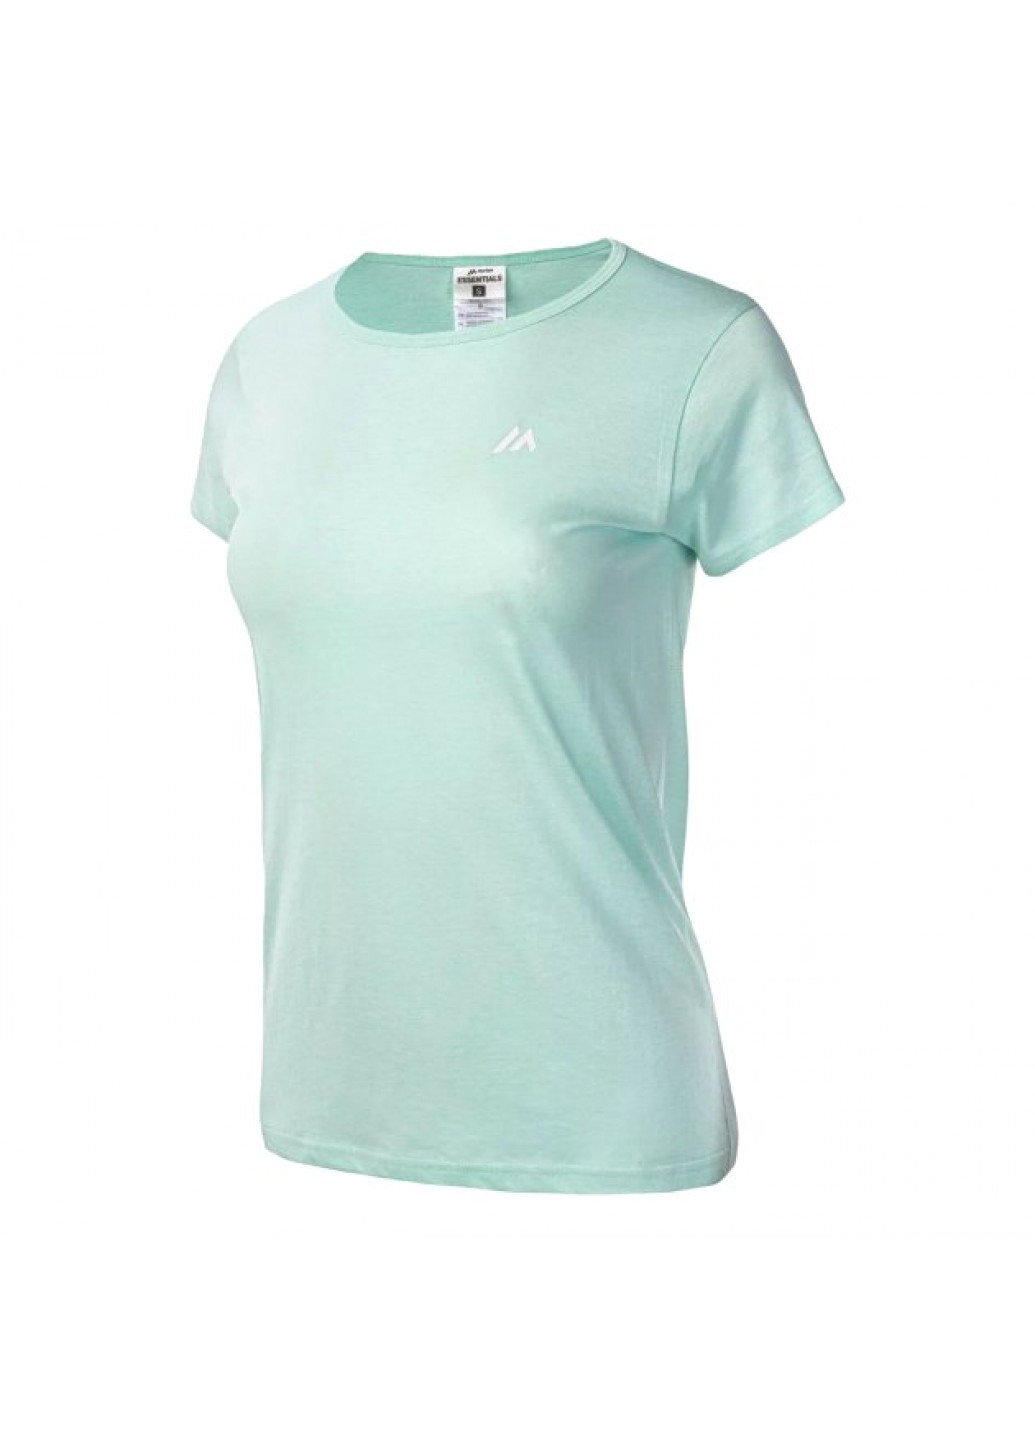 Светло-зеленая летняя футболка Martes LADY MANDO-BLUE TINT